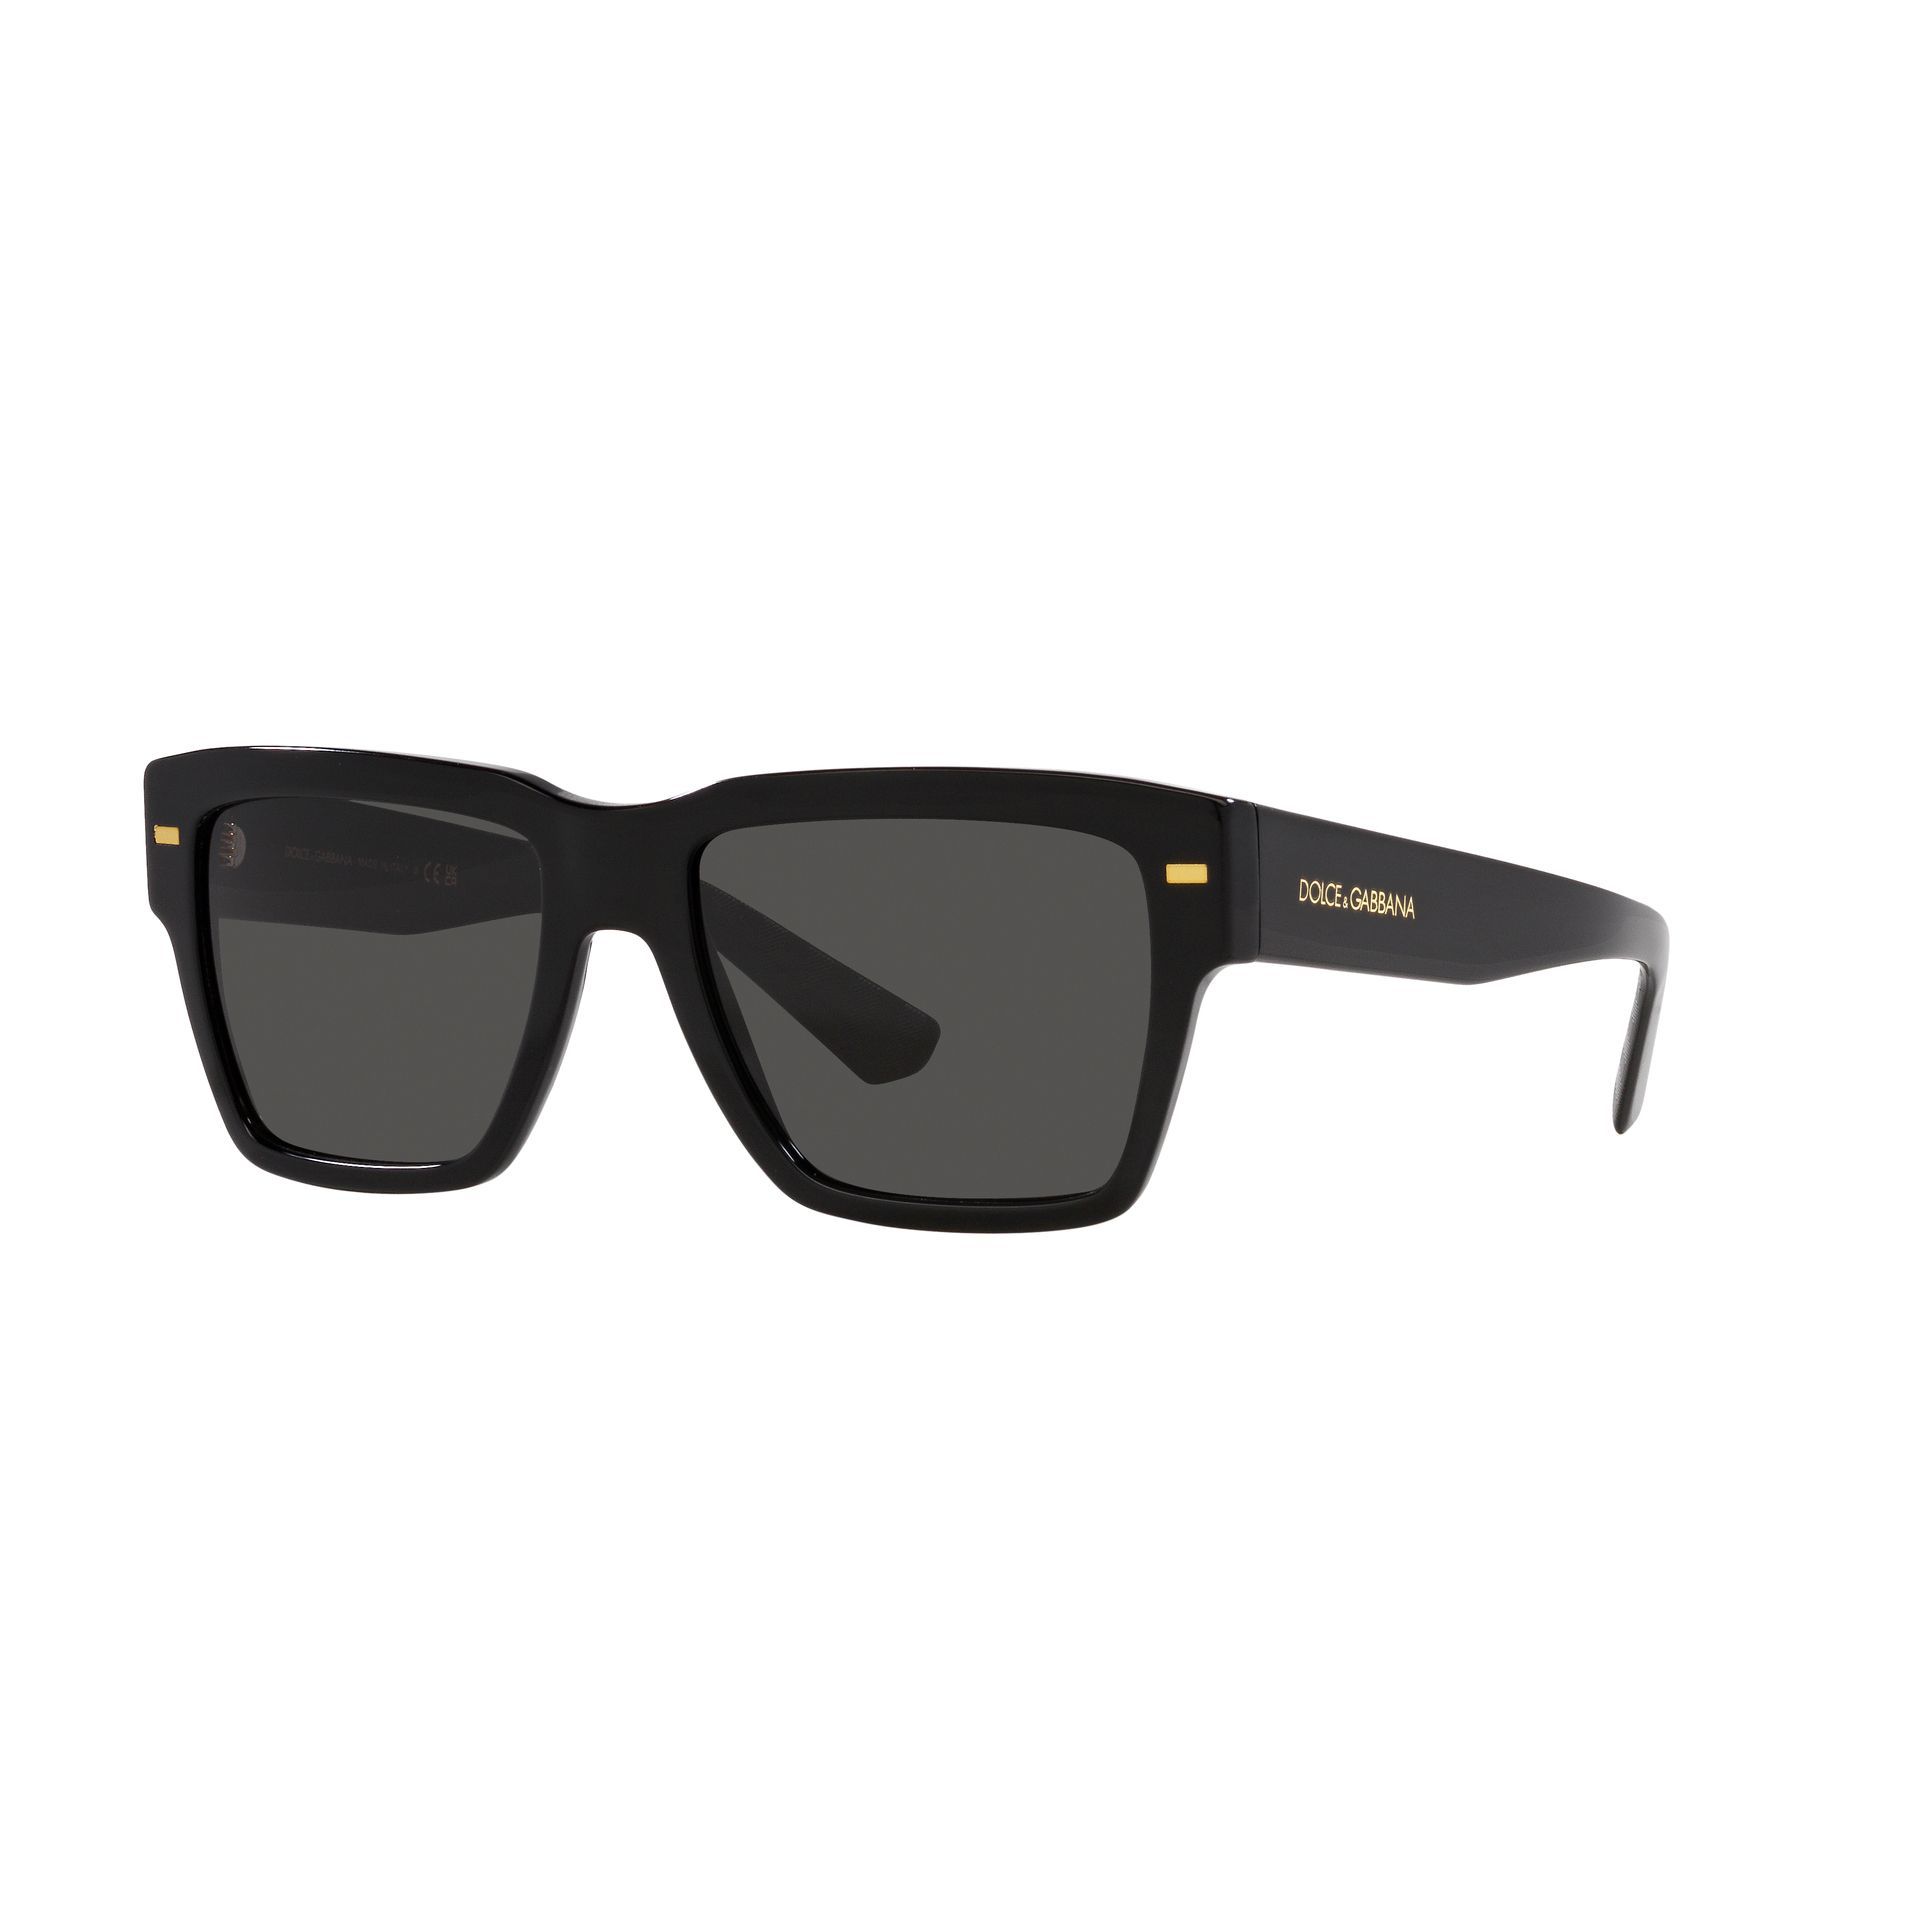 0DG4431 Square Sunglasses 501 87 - size 55